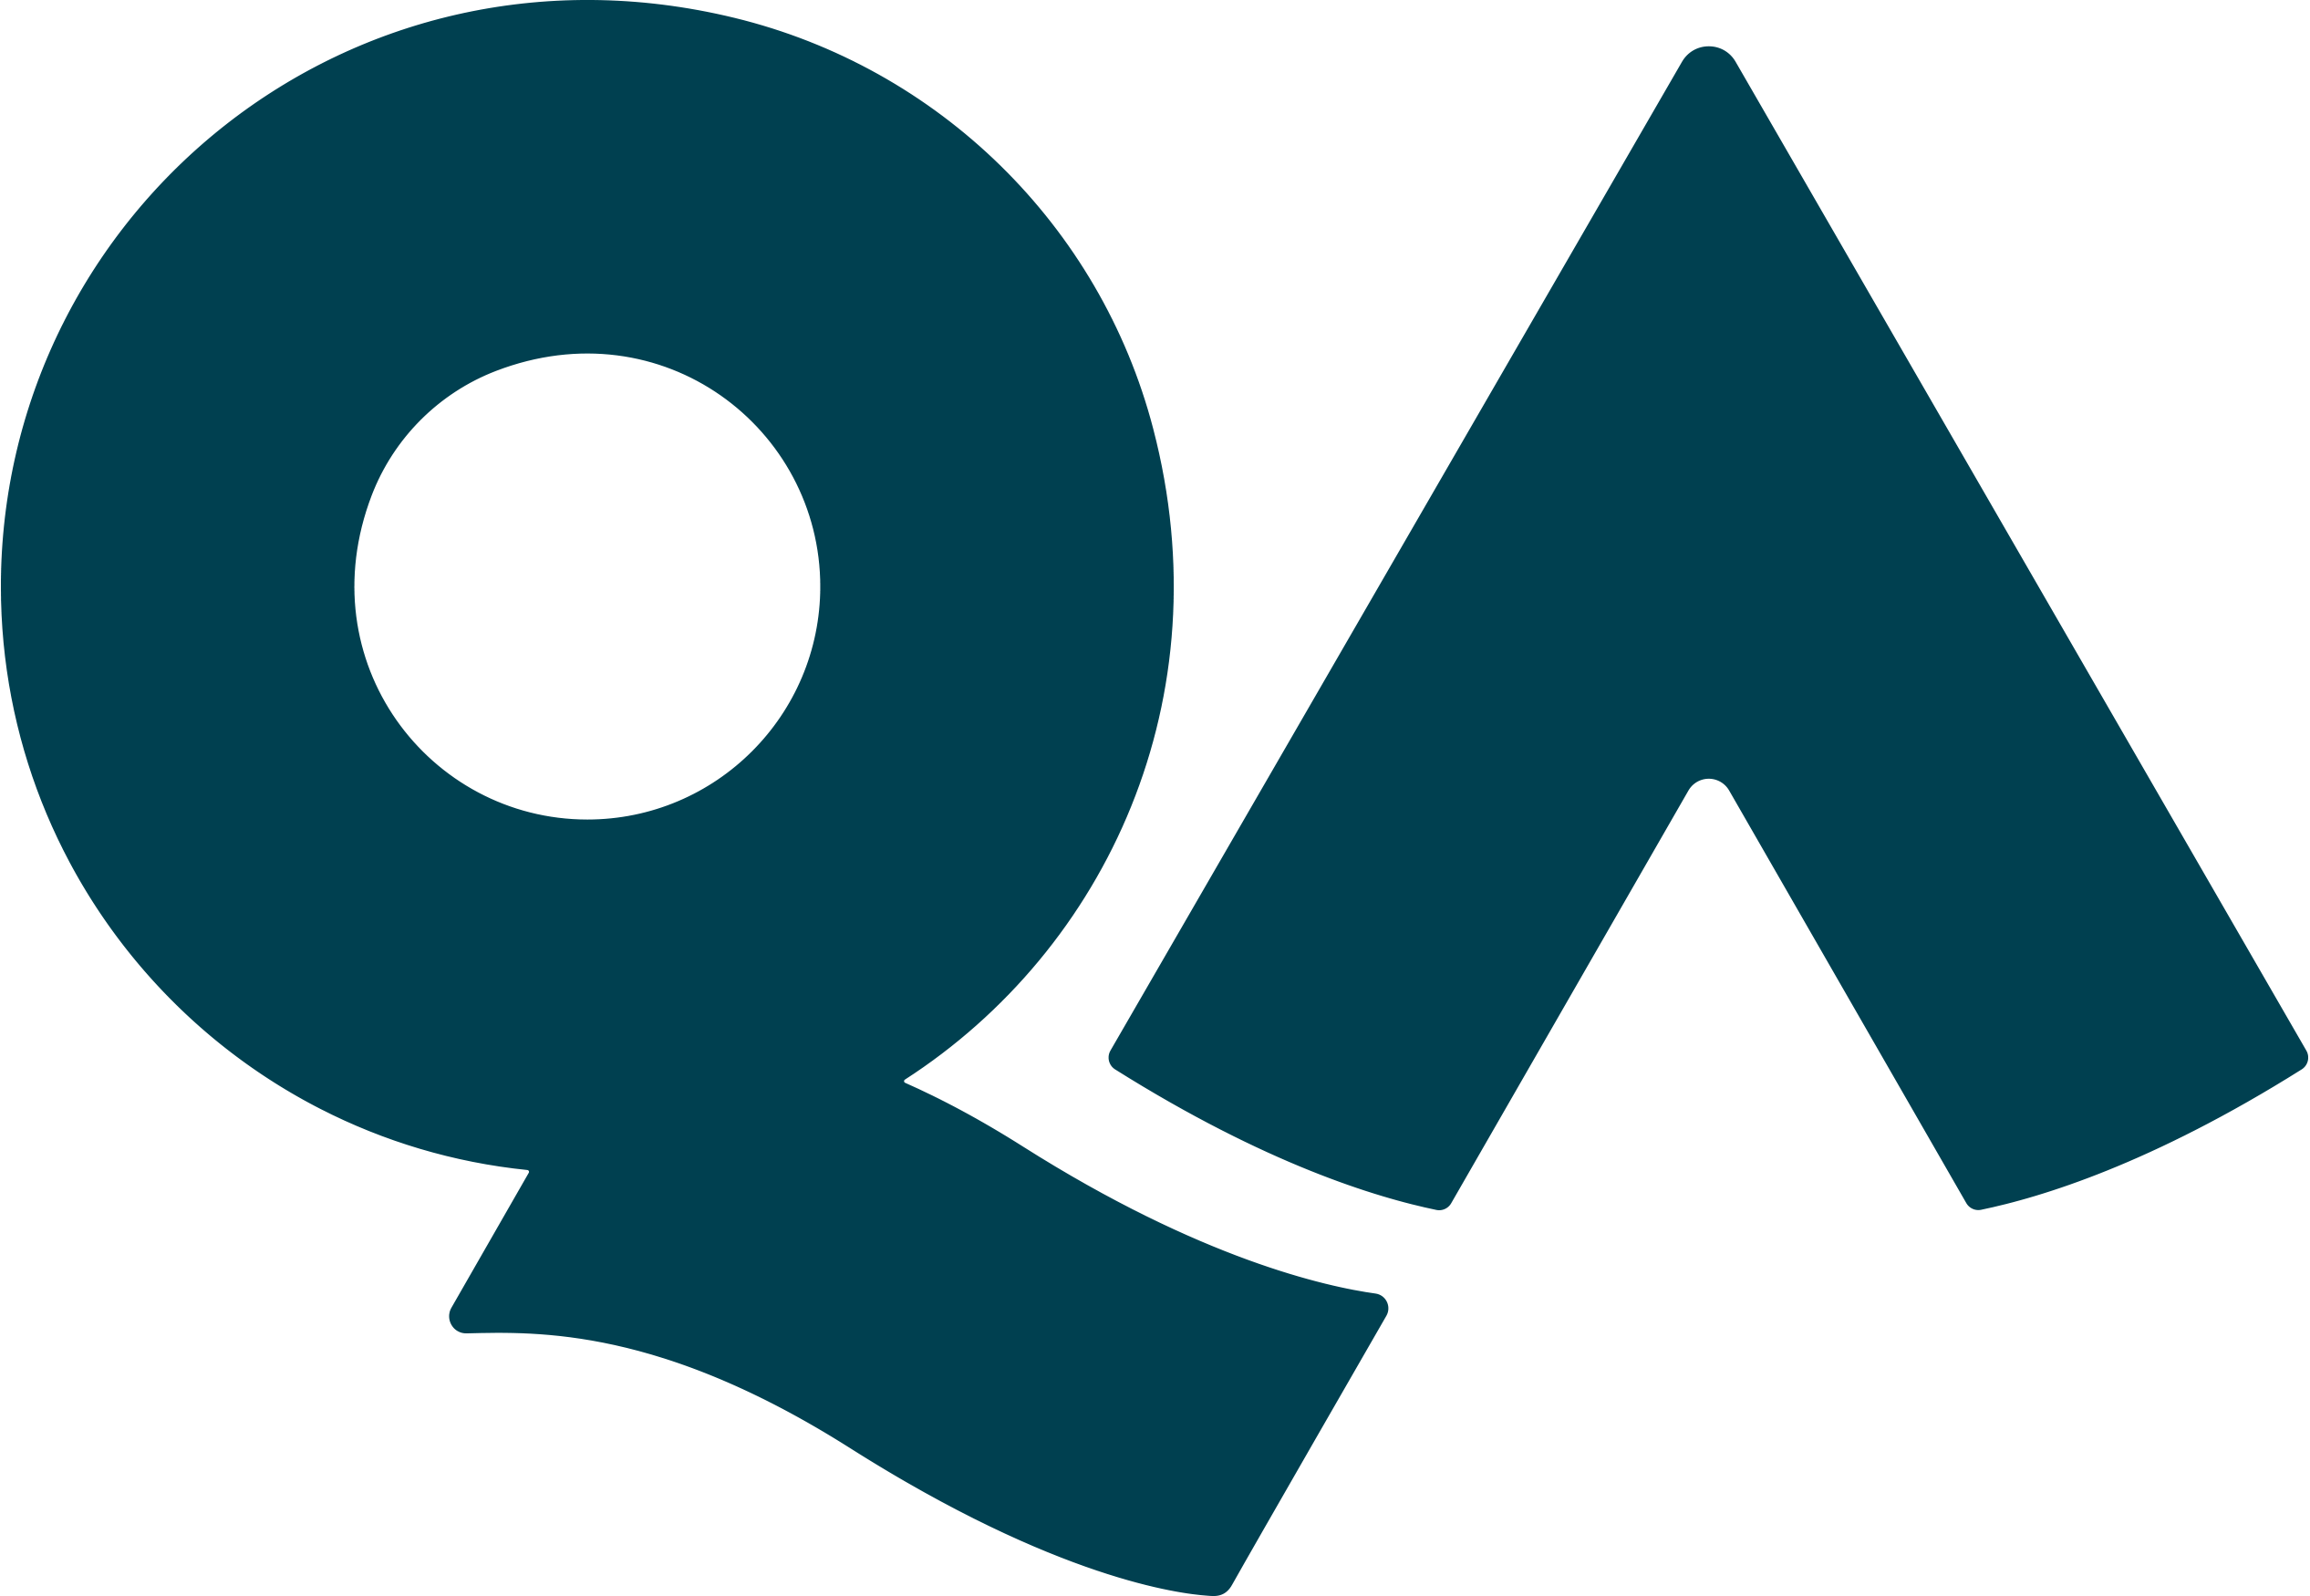 To show the QA logo